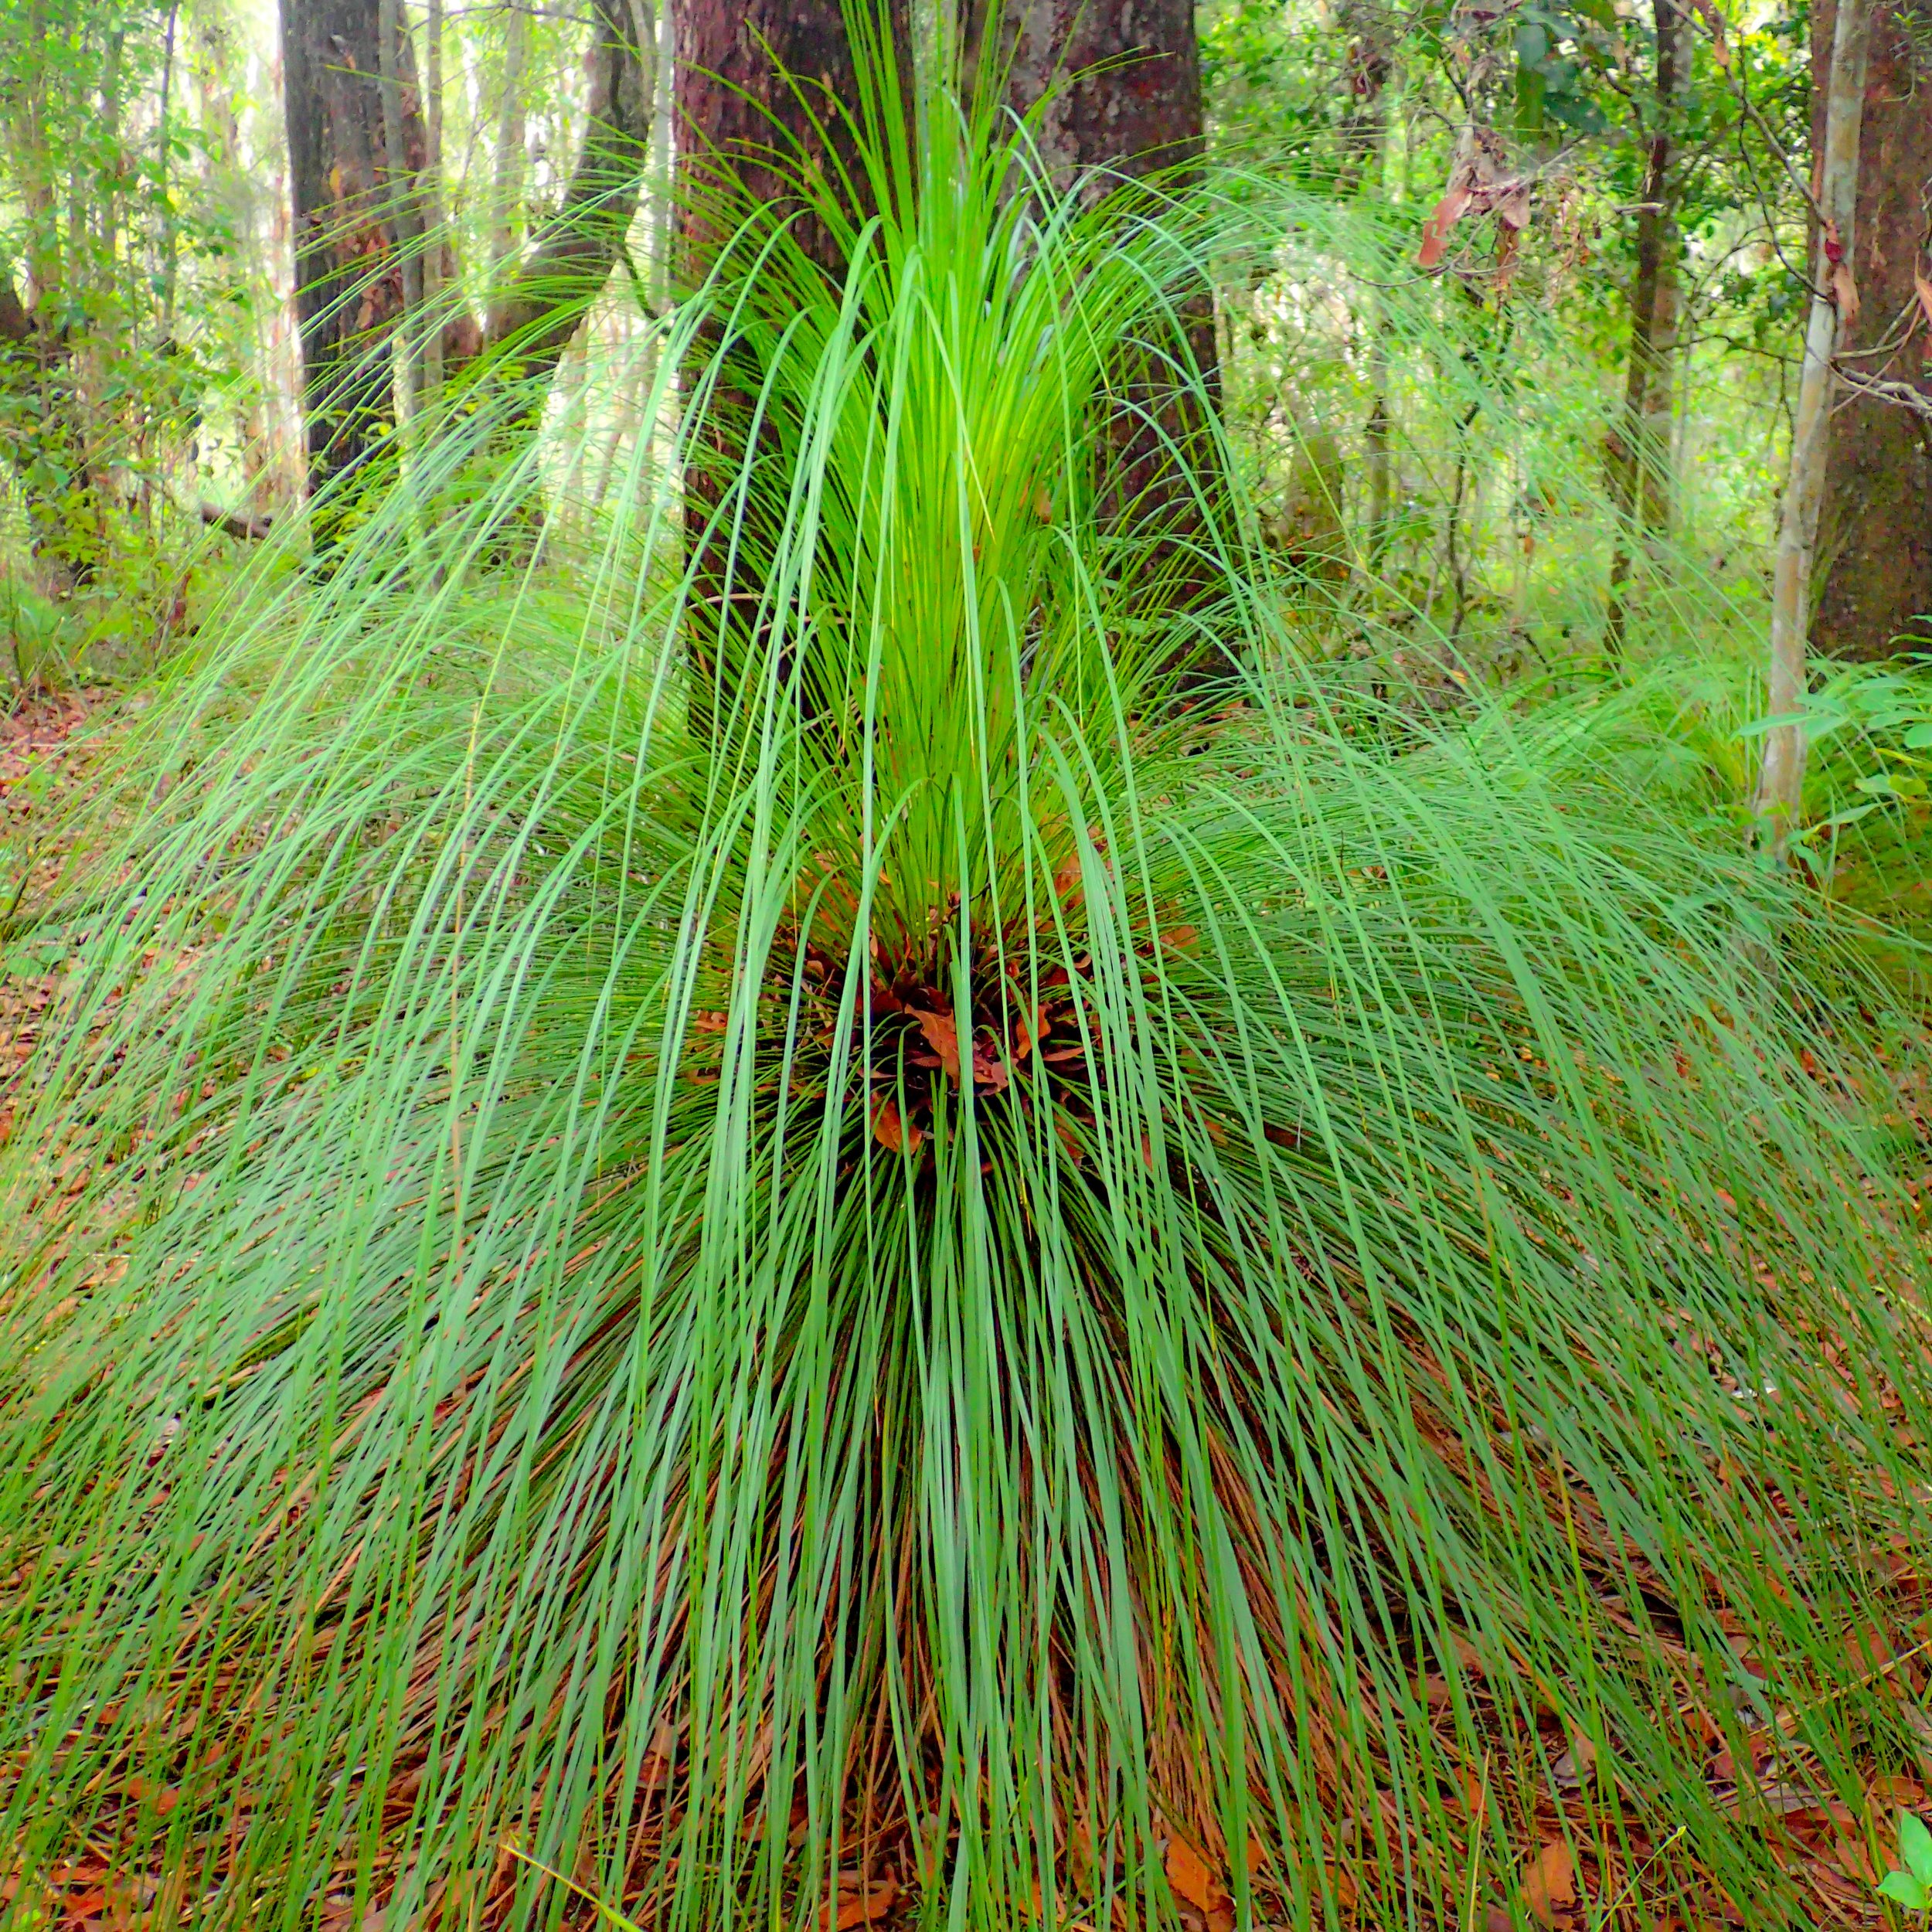 Xanthorrea johnsonii/Grass Tree